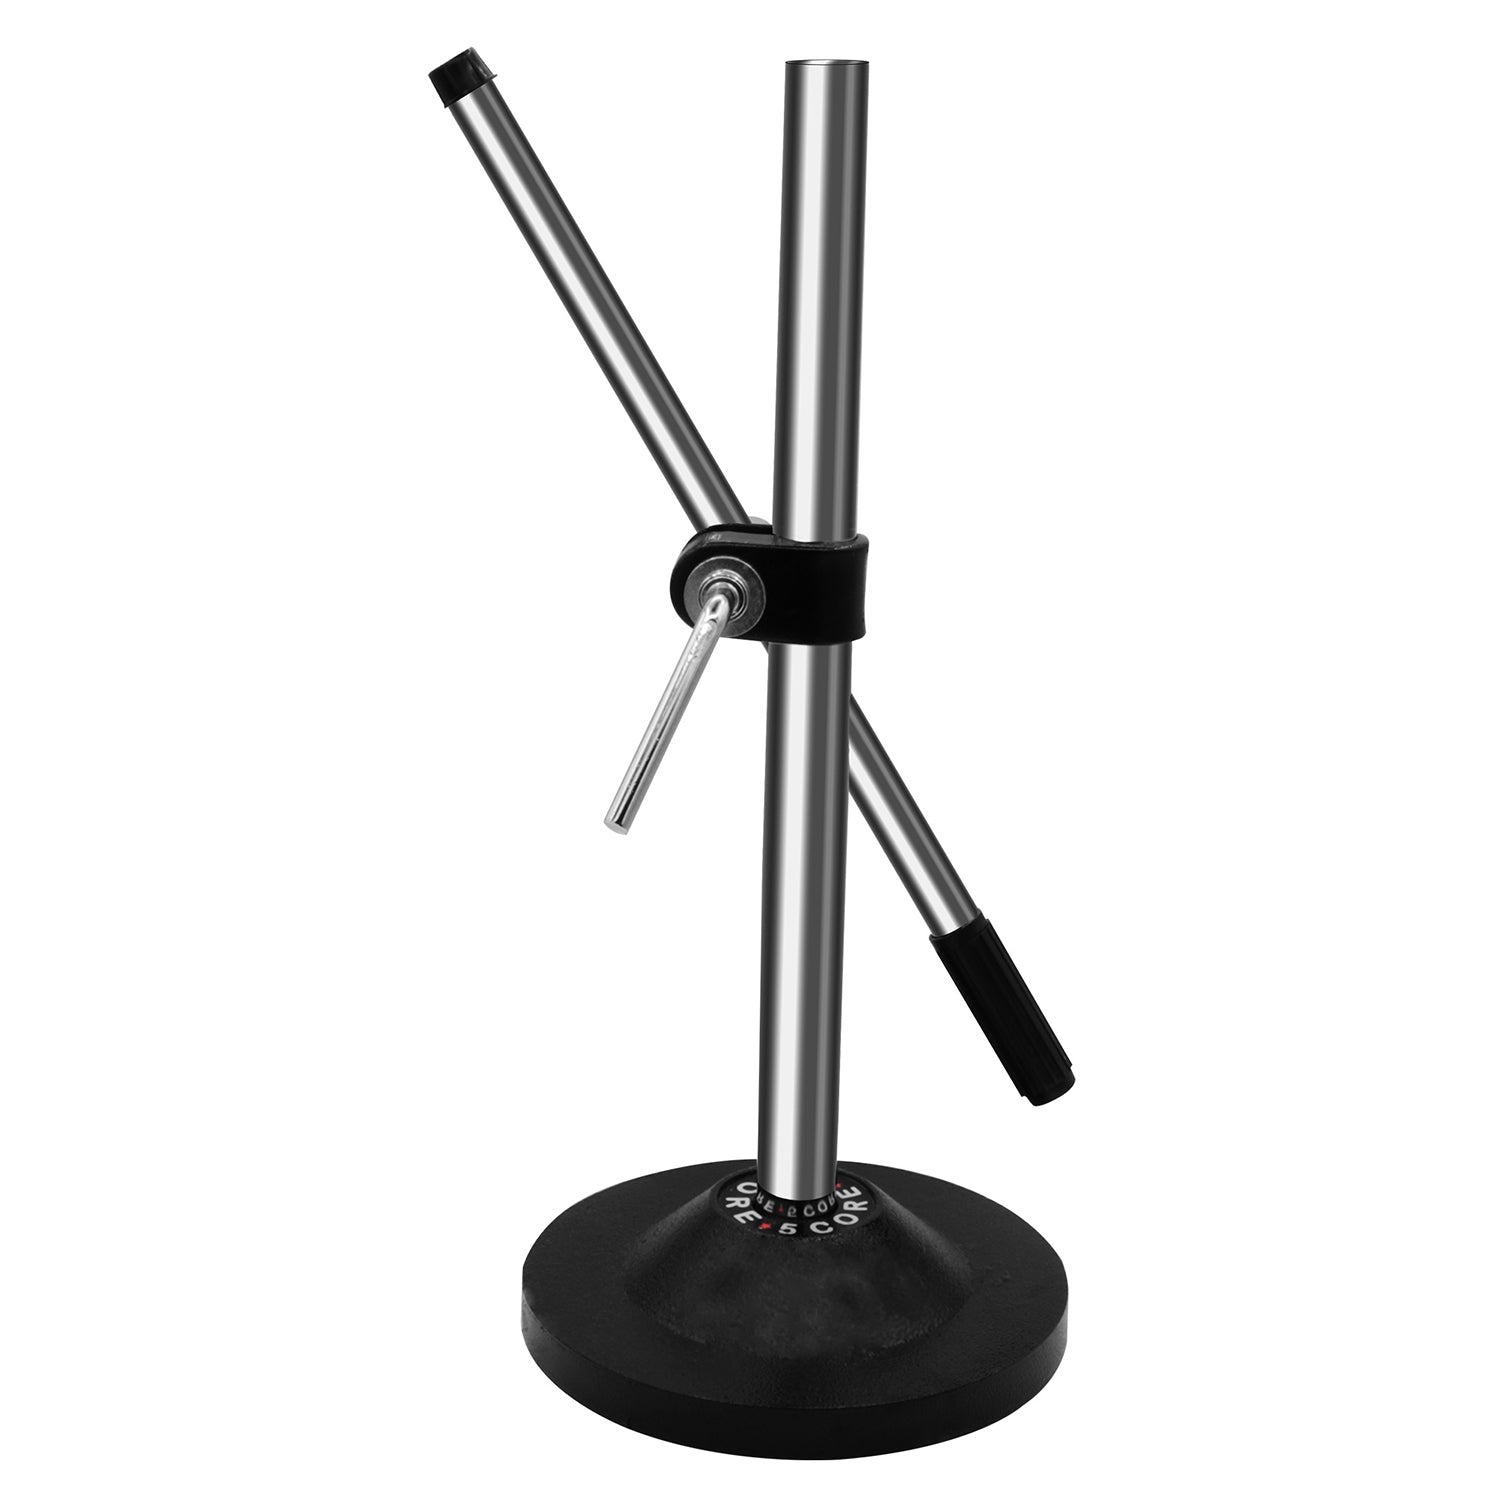 5 Core Desk Mic Stand Adjustable Table Round Base Portable Desktop Microphone Stands Holder